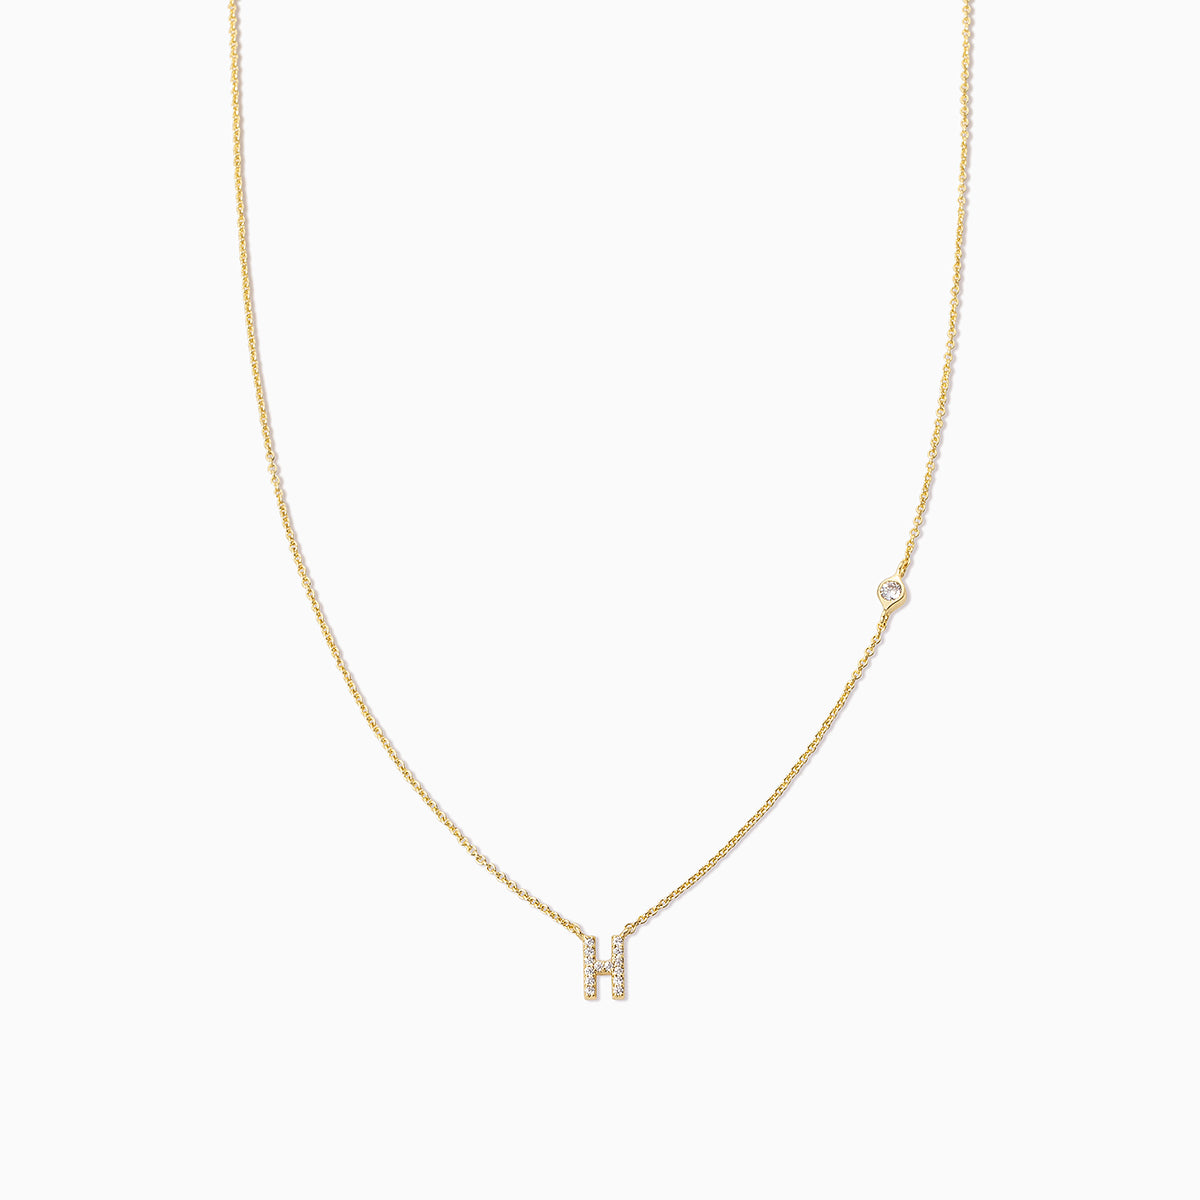 Pavé Initial Necklace | Gold H | Product Image | Uncommon James